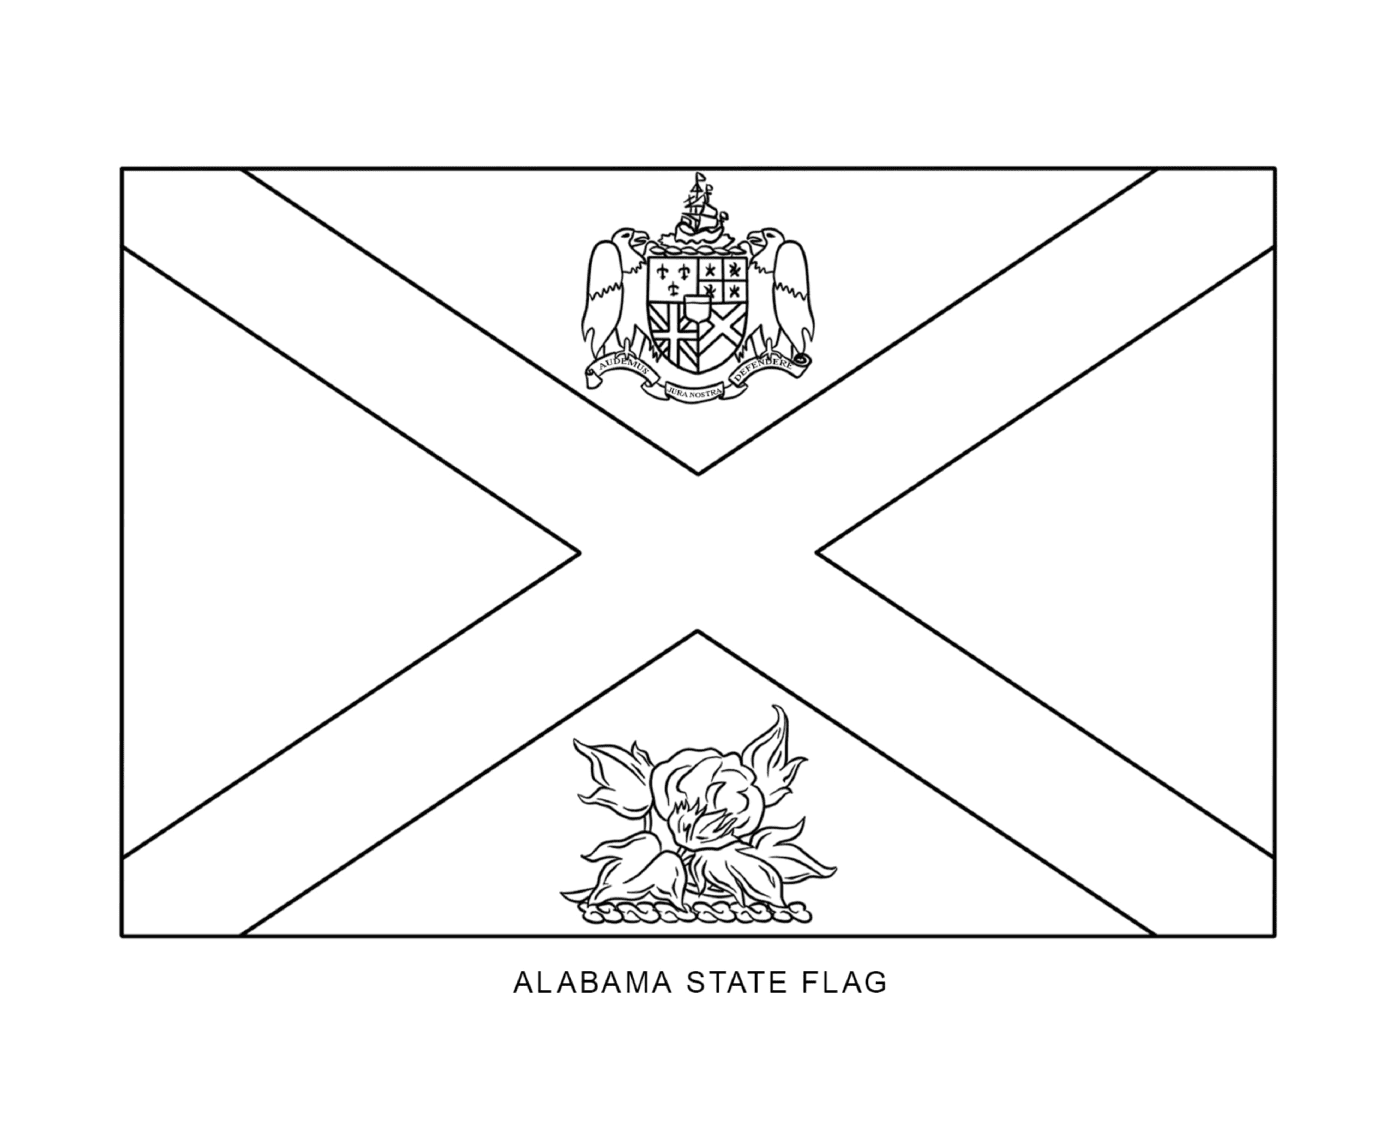  Bandeira do Estado do Alabama desenhada 